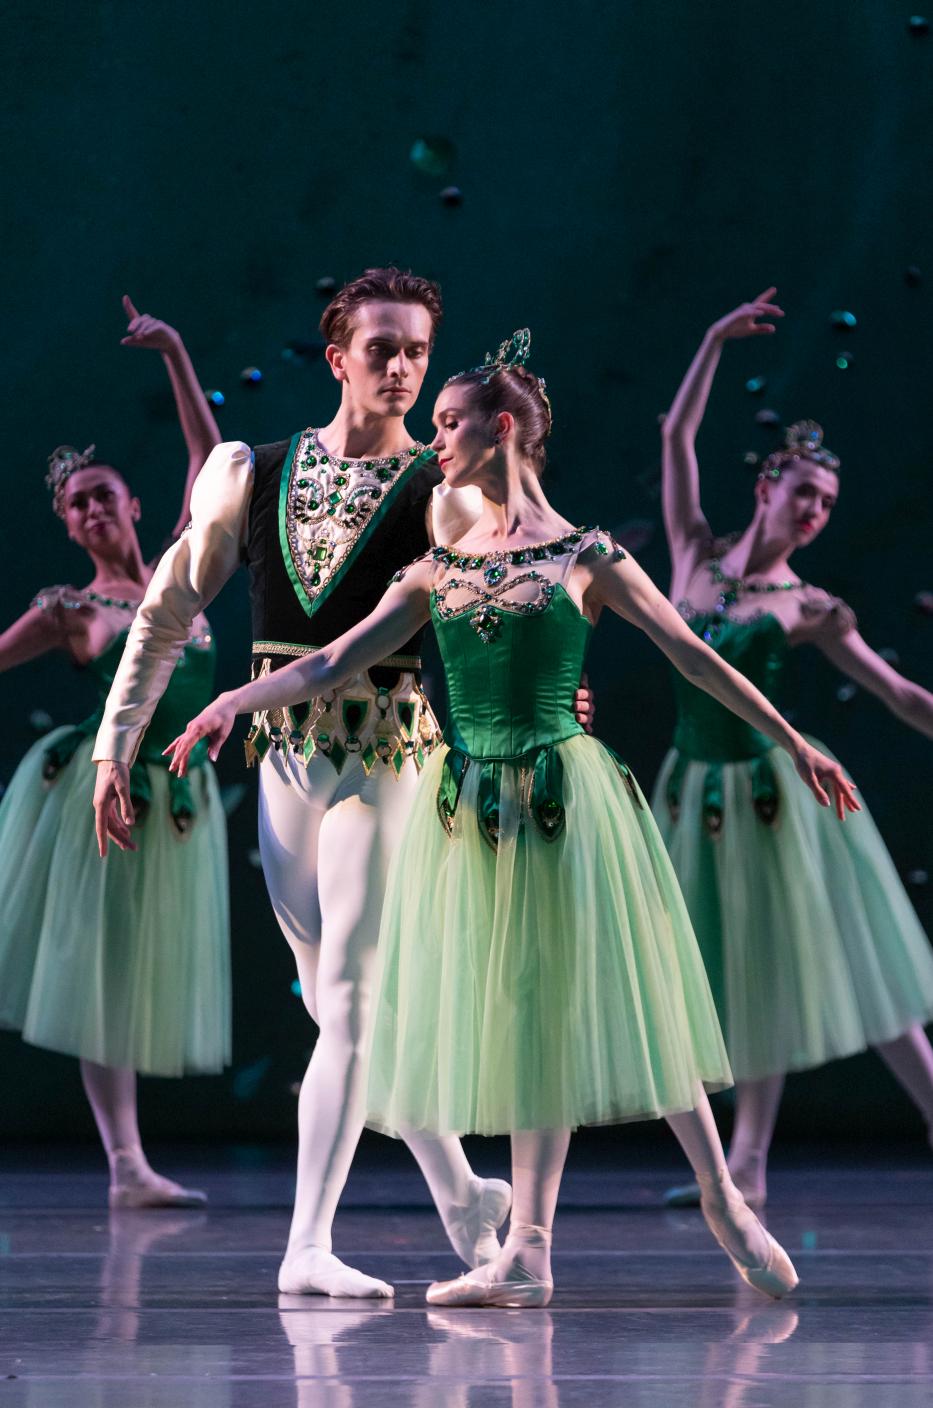 2. C.Linnane, S.Spencer, and ensemble, “Jewels” by G.Balanchine, The Australian Ballet 2023 © R.Lantry 